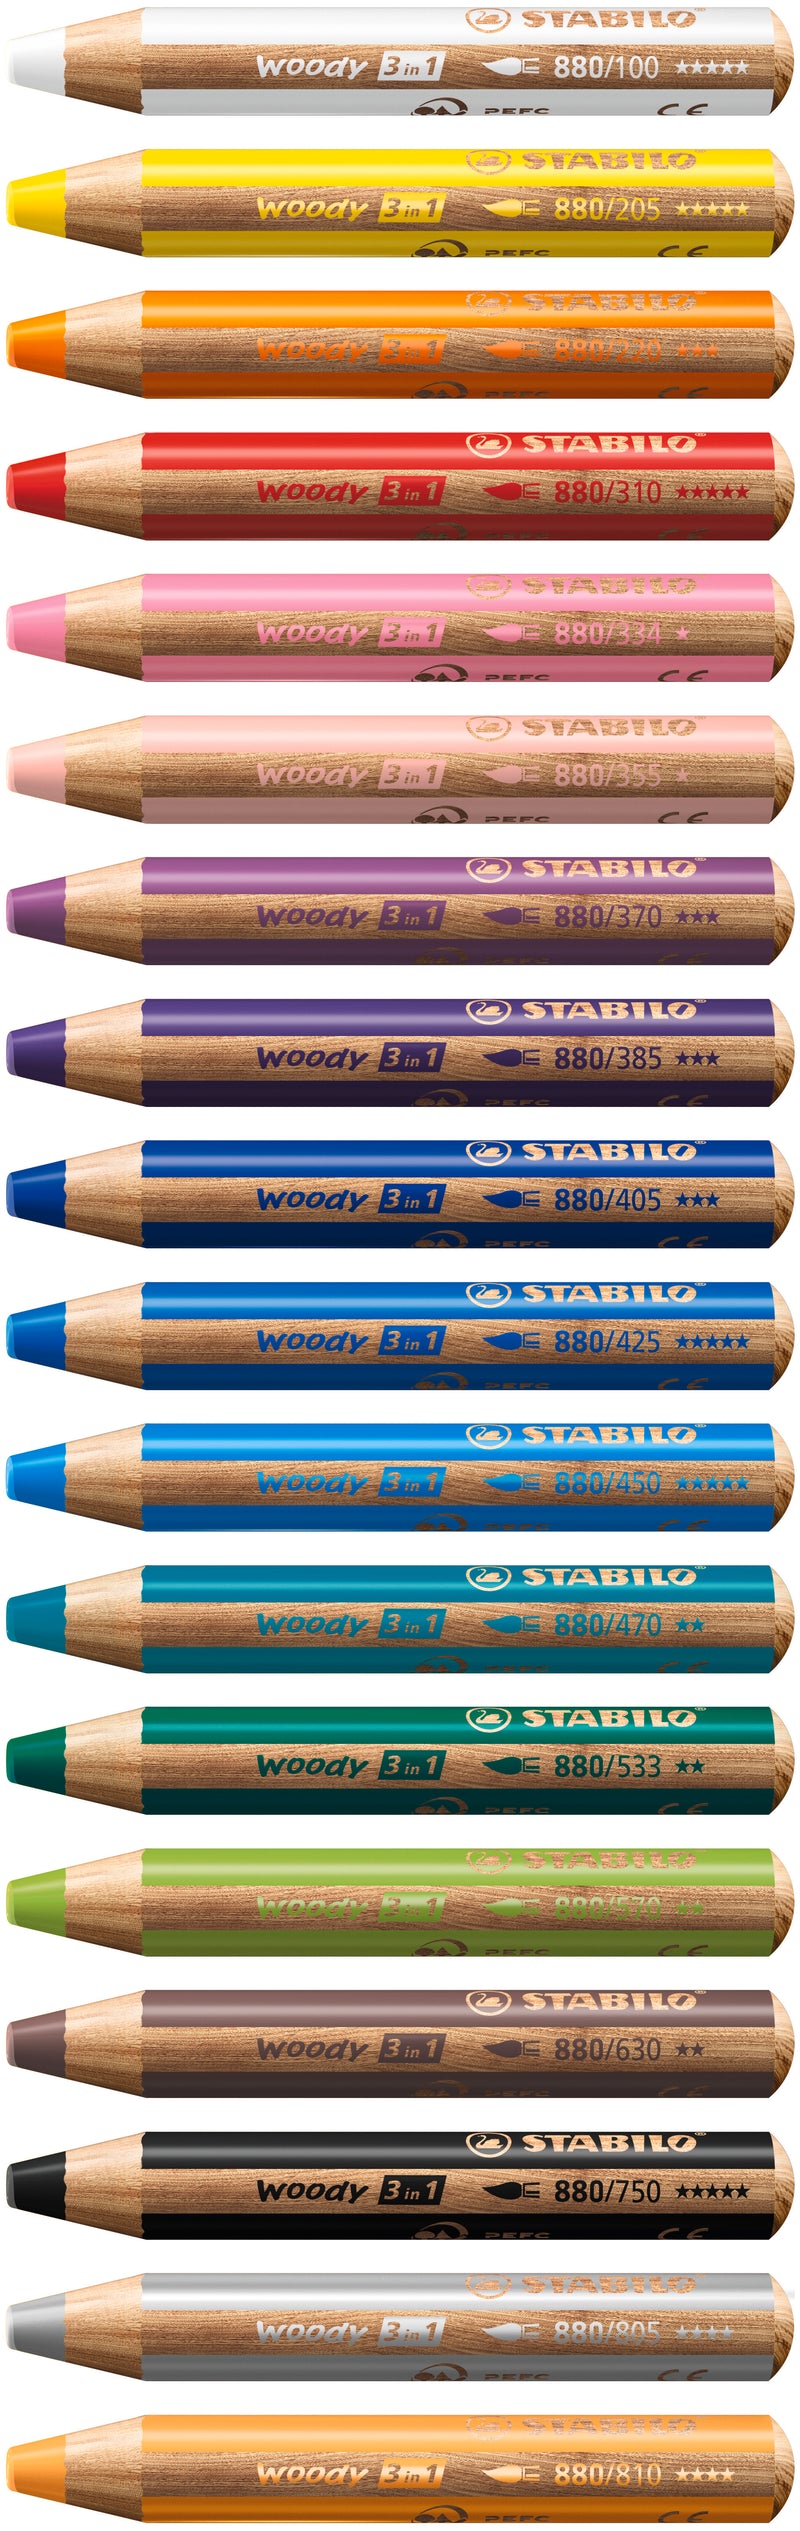 Stabilo Etui de 10 crayons de couleur aquarellable Woody + 1